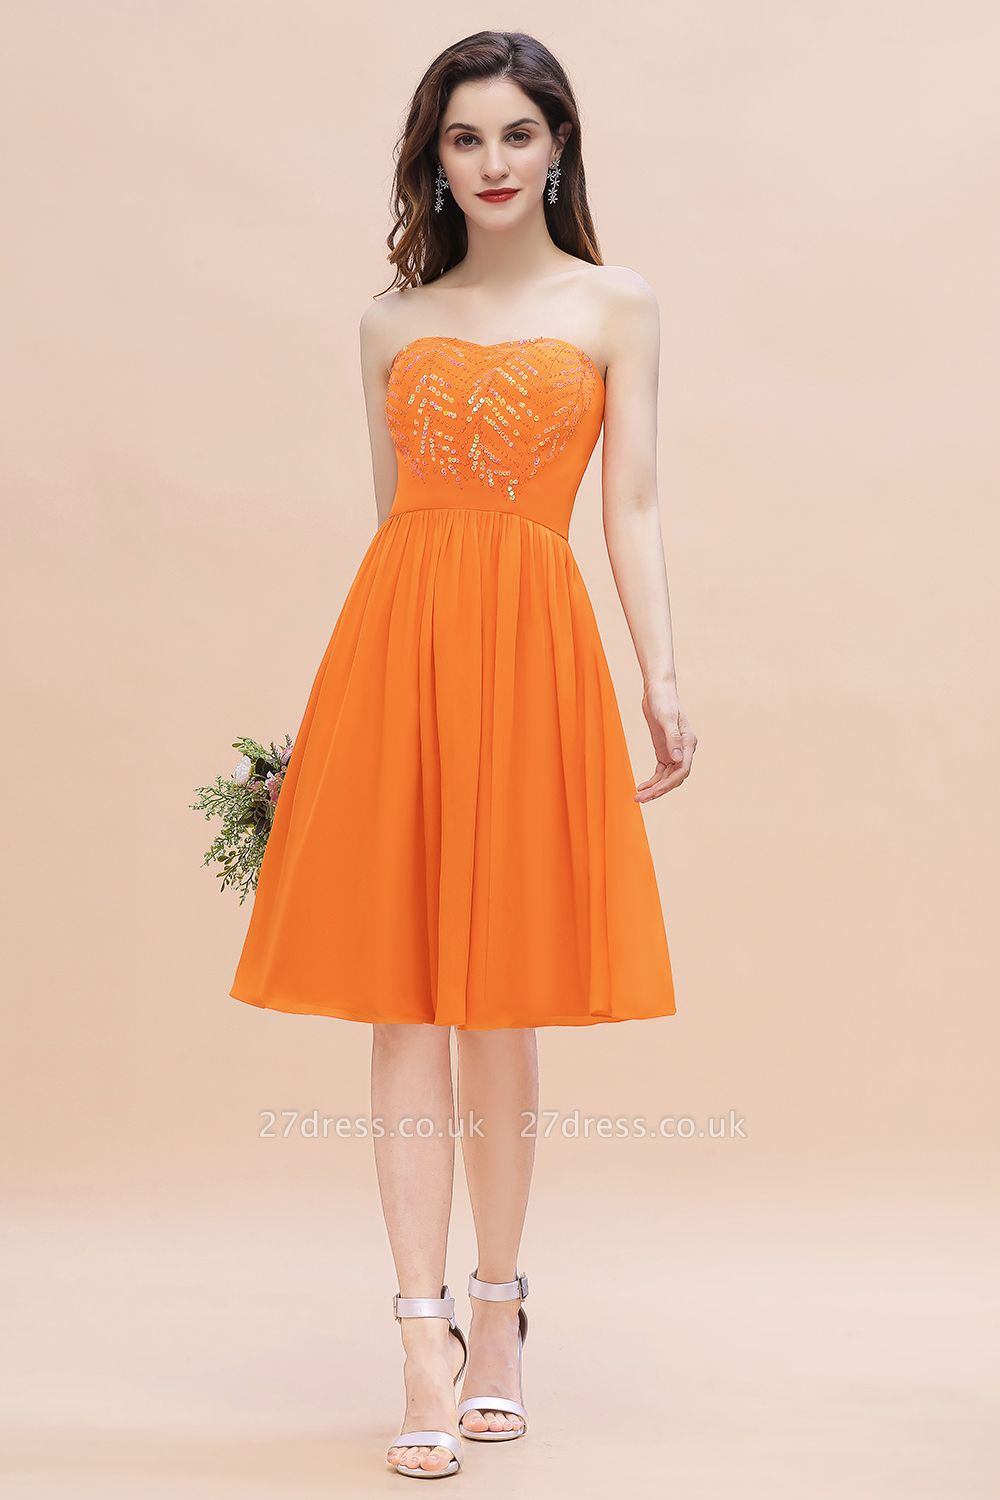 Pretty Strapless Orange Short Bridesmaid Dresses Knee Length Wedding Party Dress